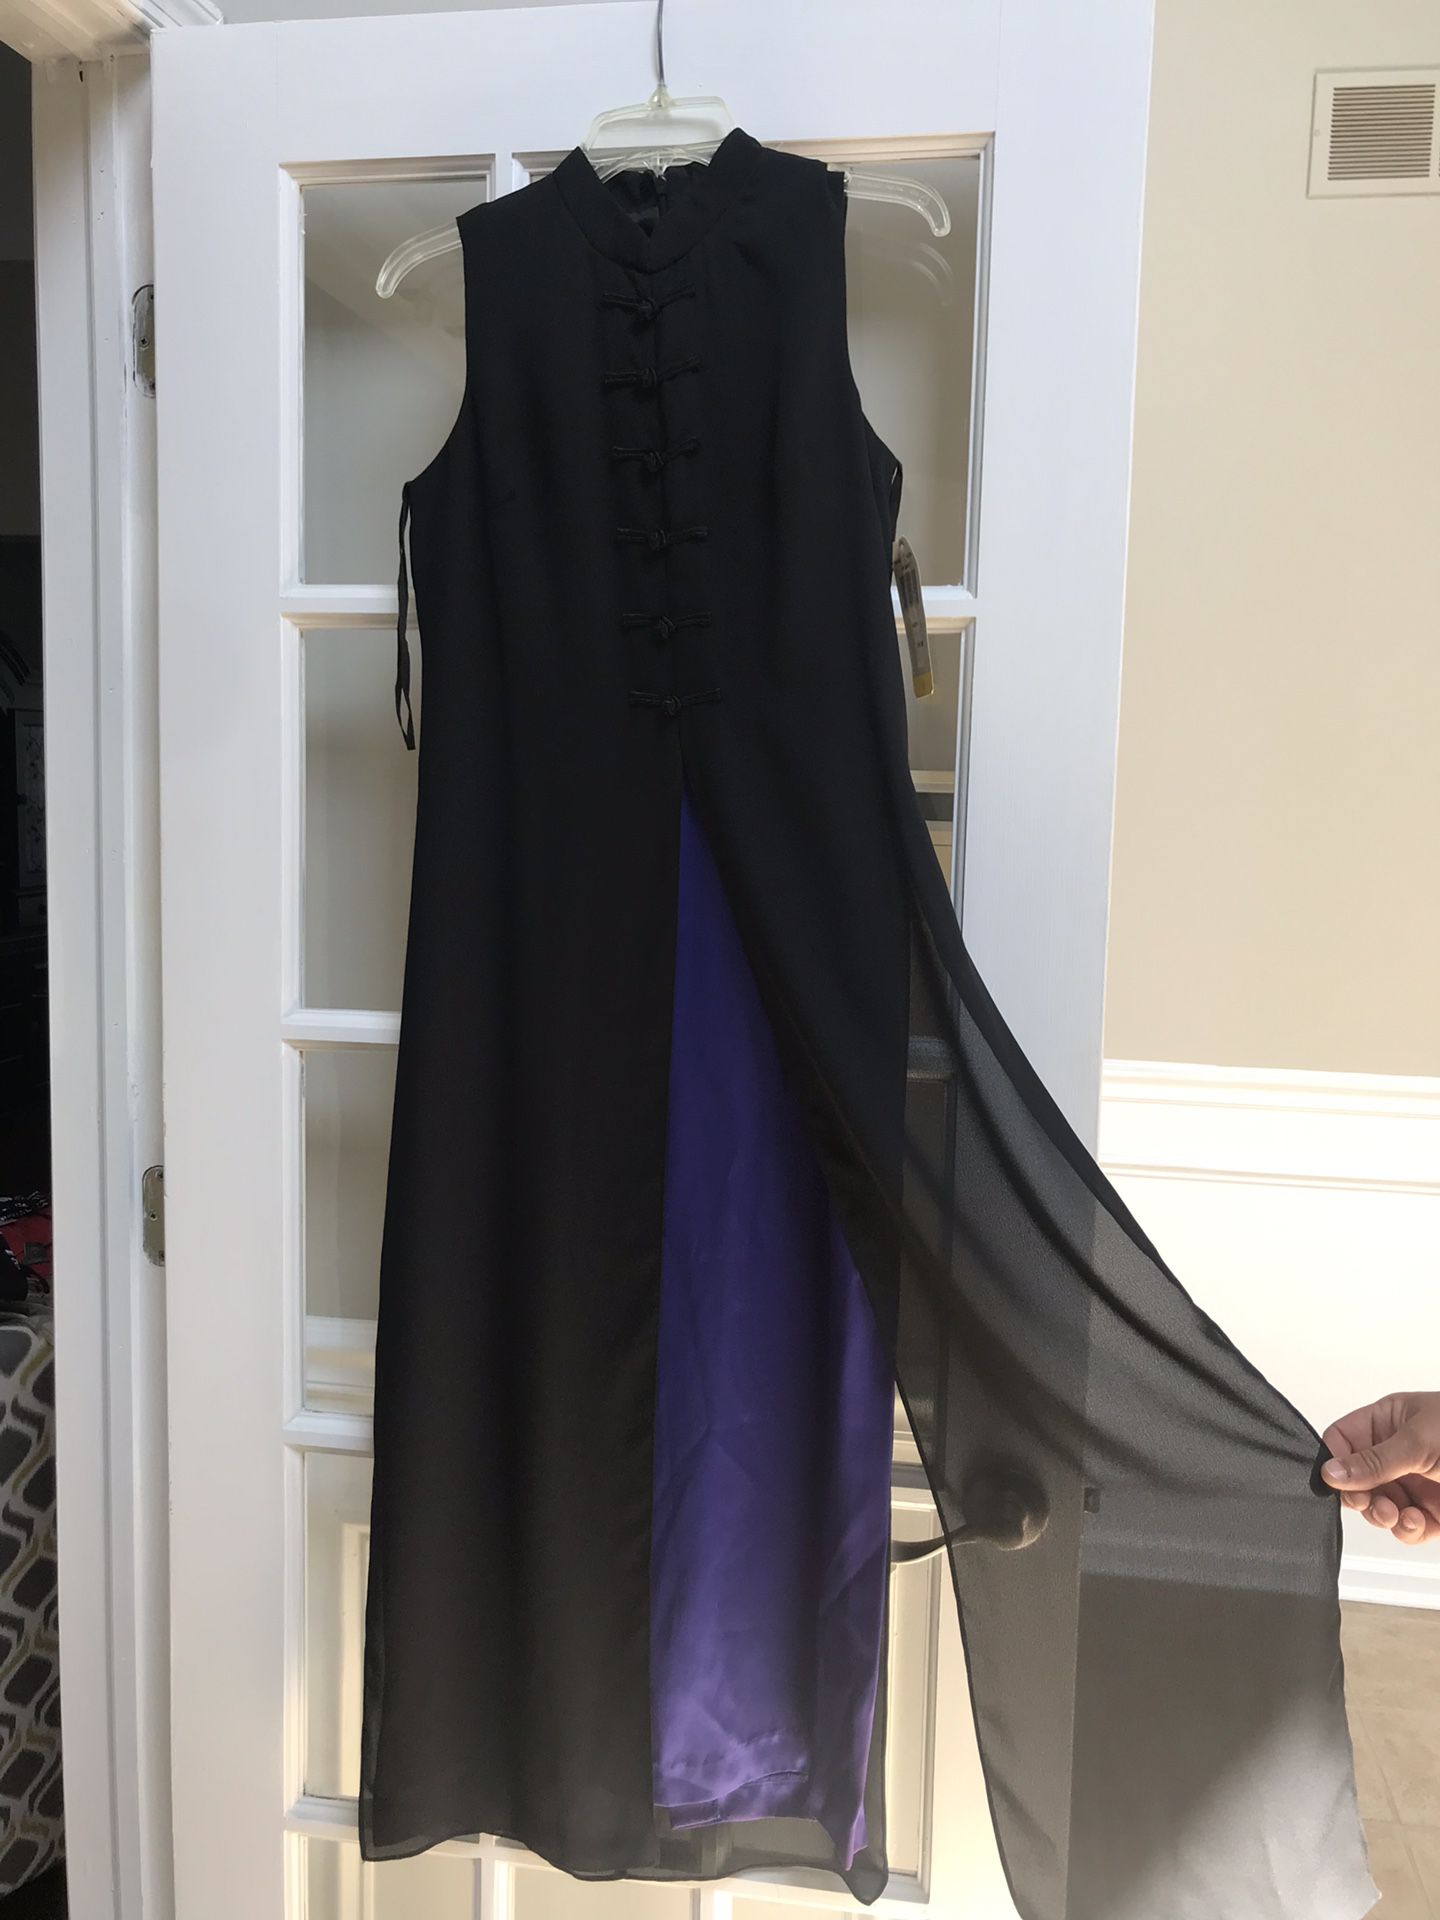 Black / purple dress